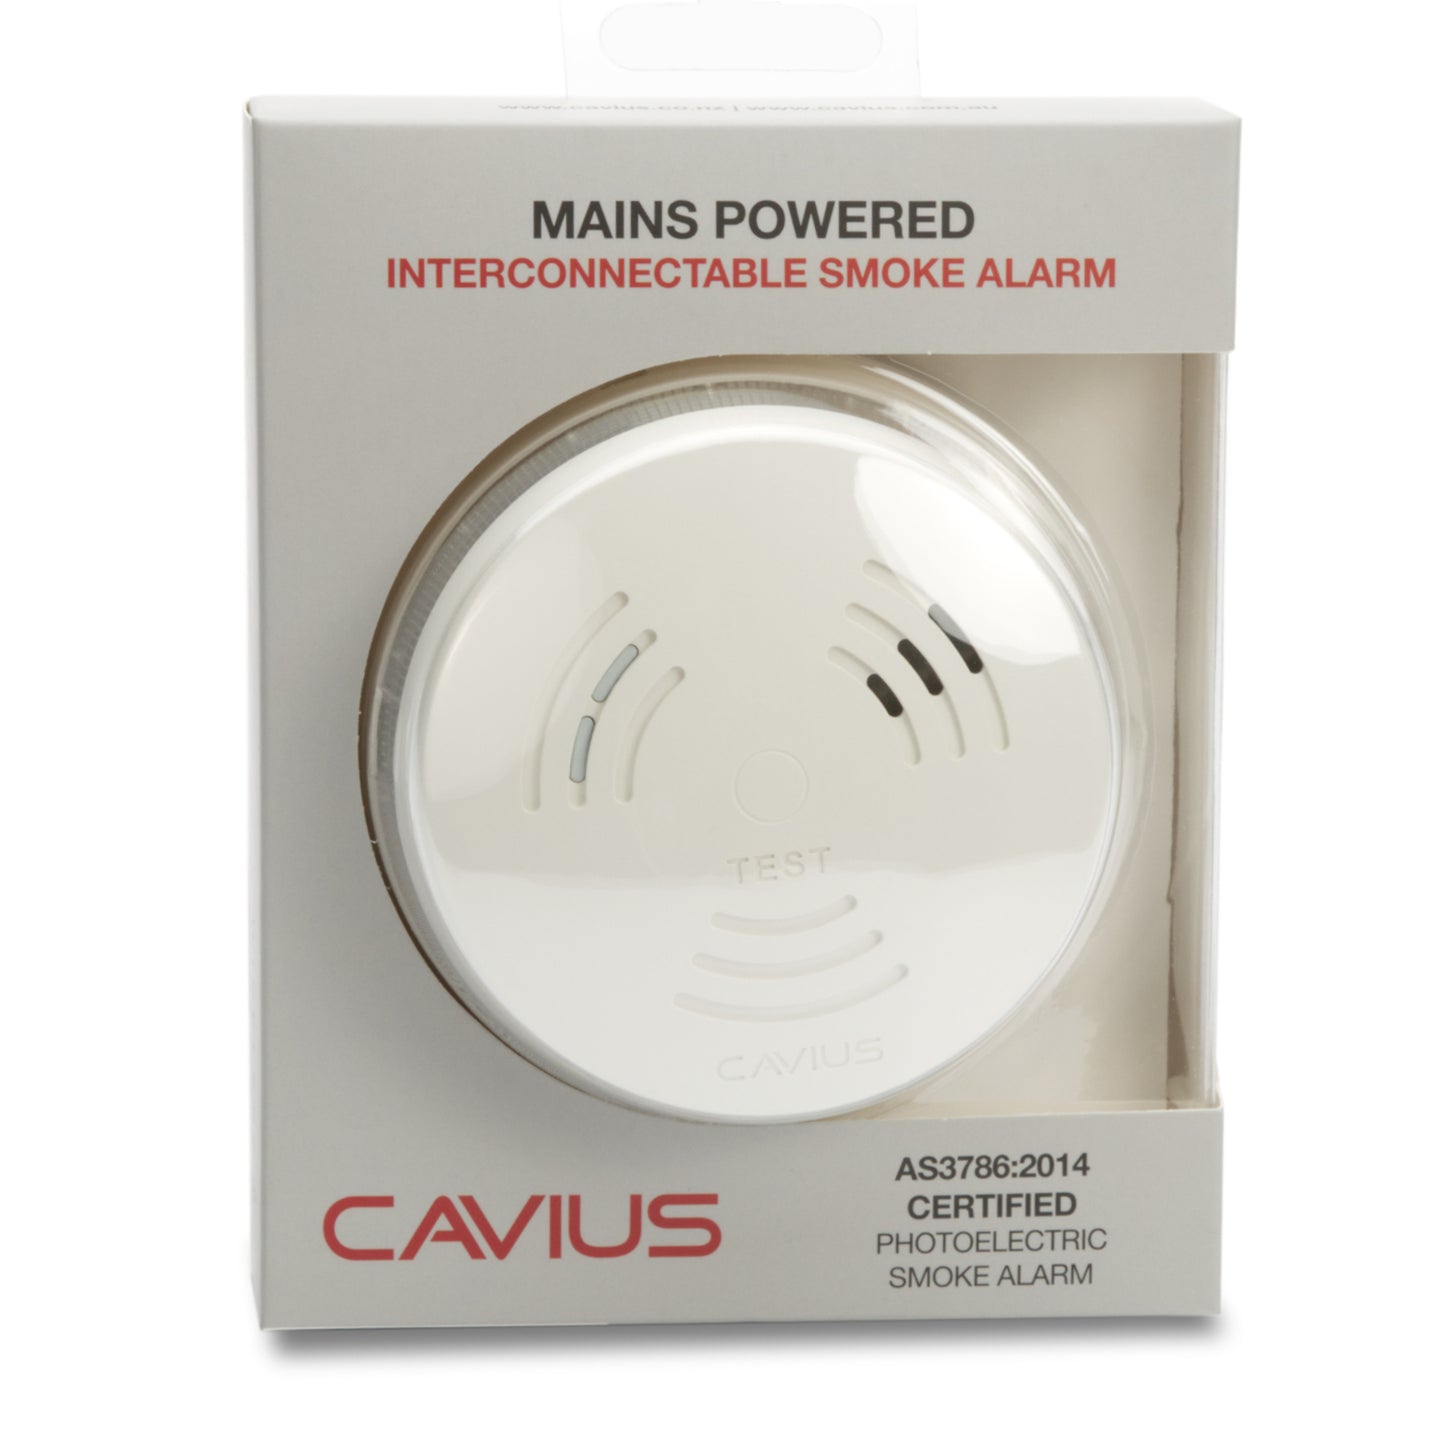 CAVIUS Mains Powered Alarm with Wireless Intercon